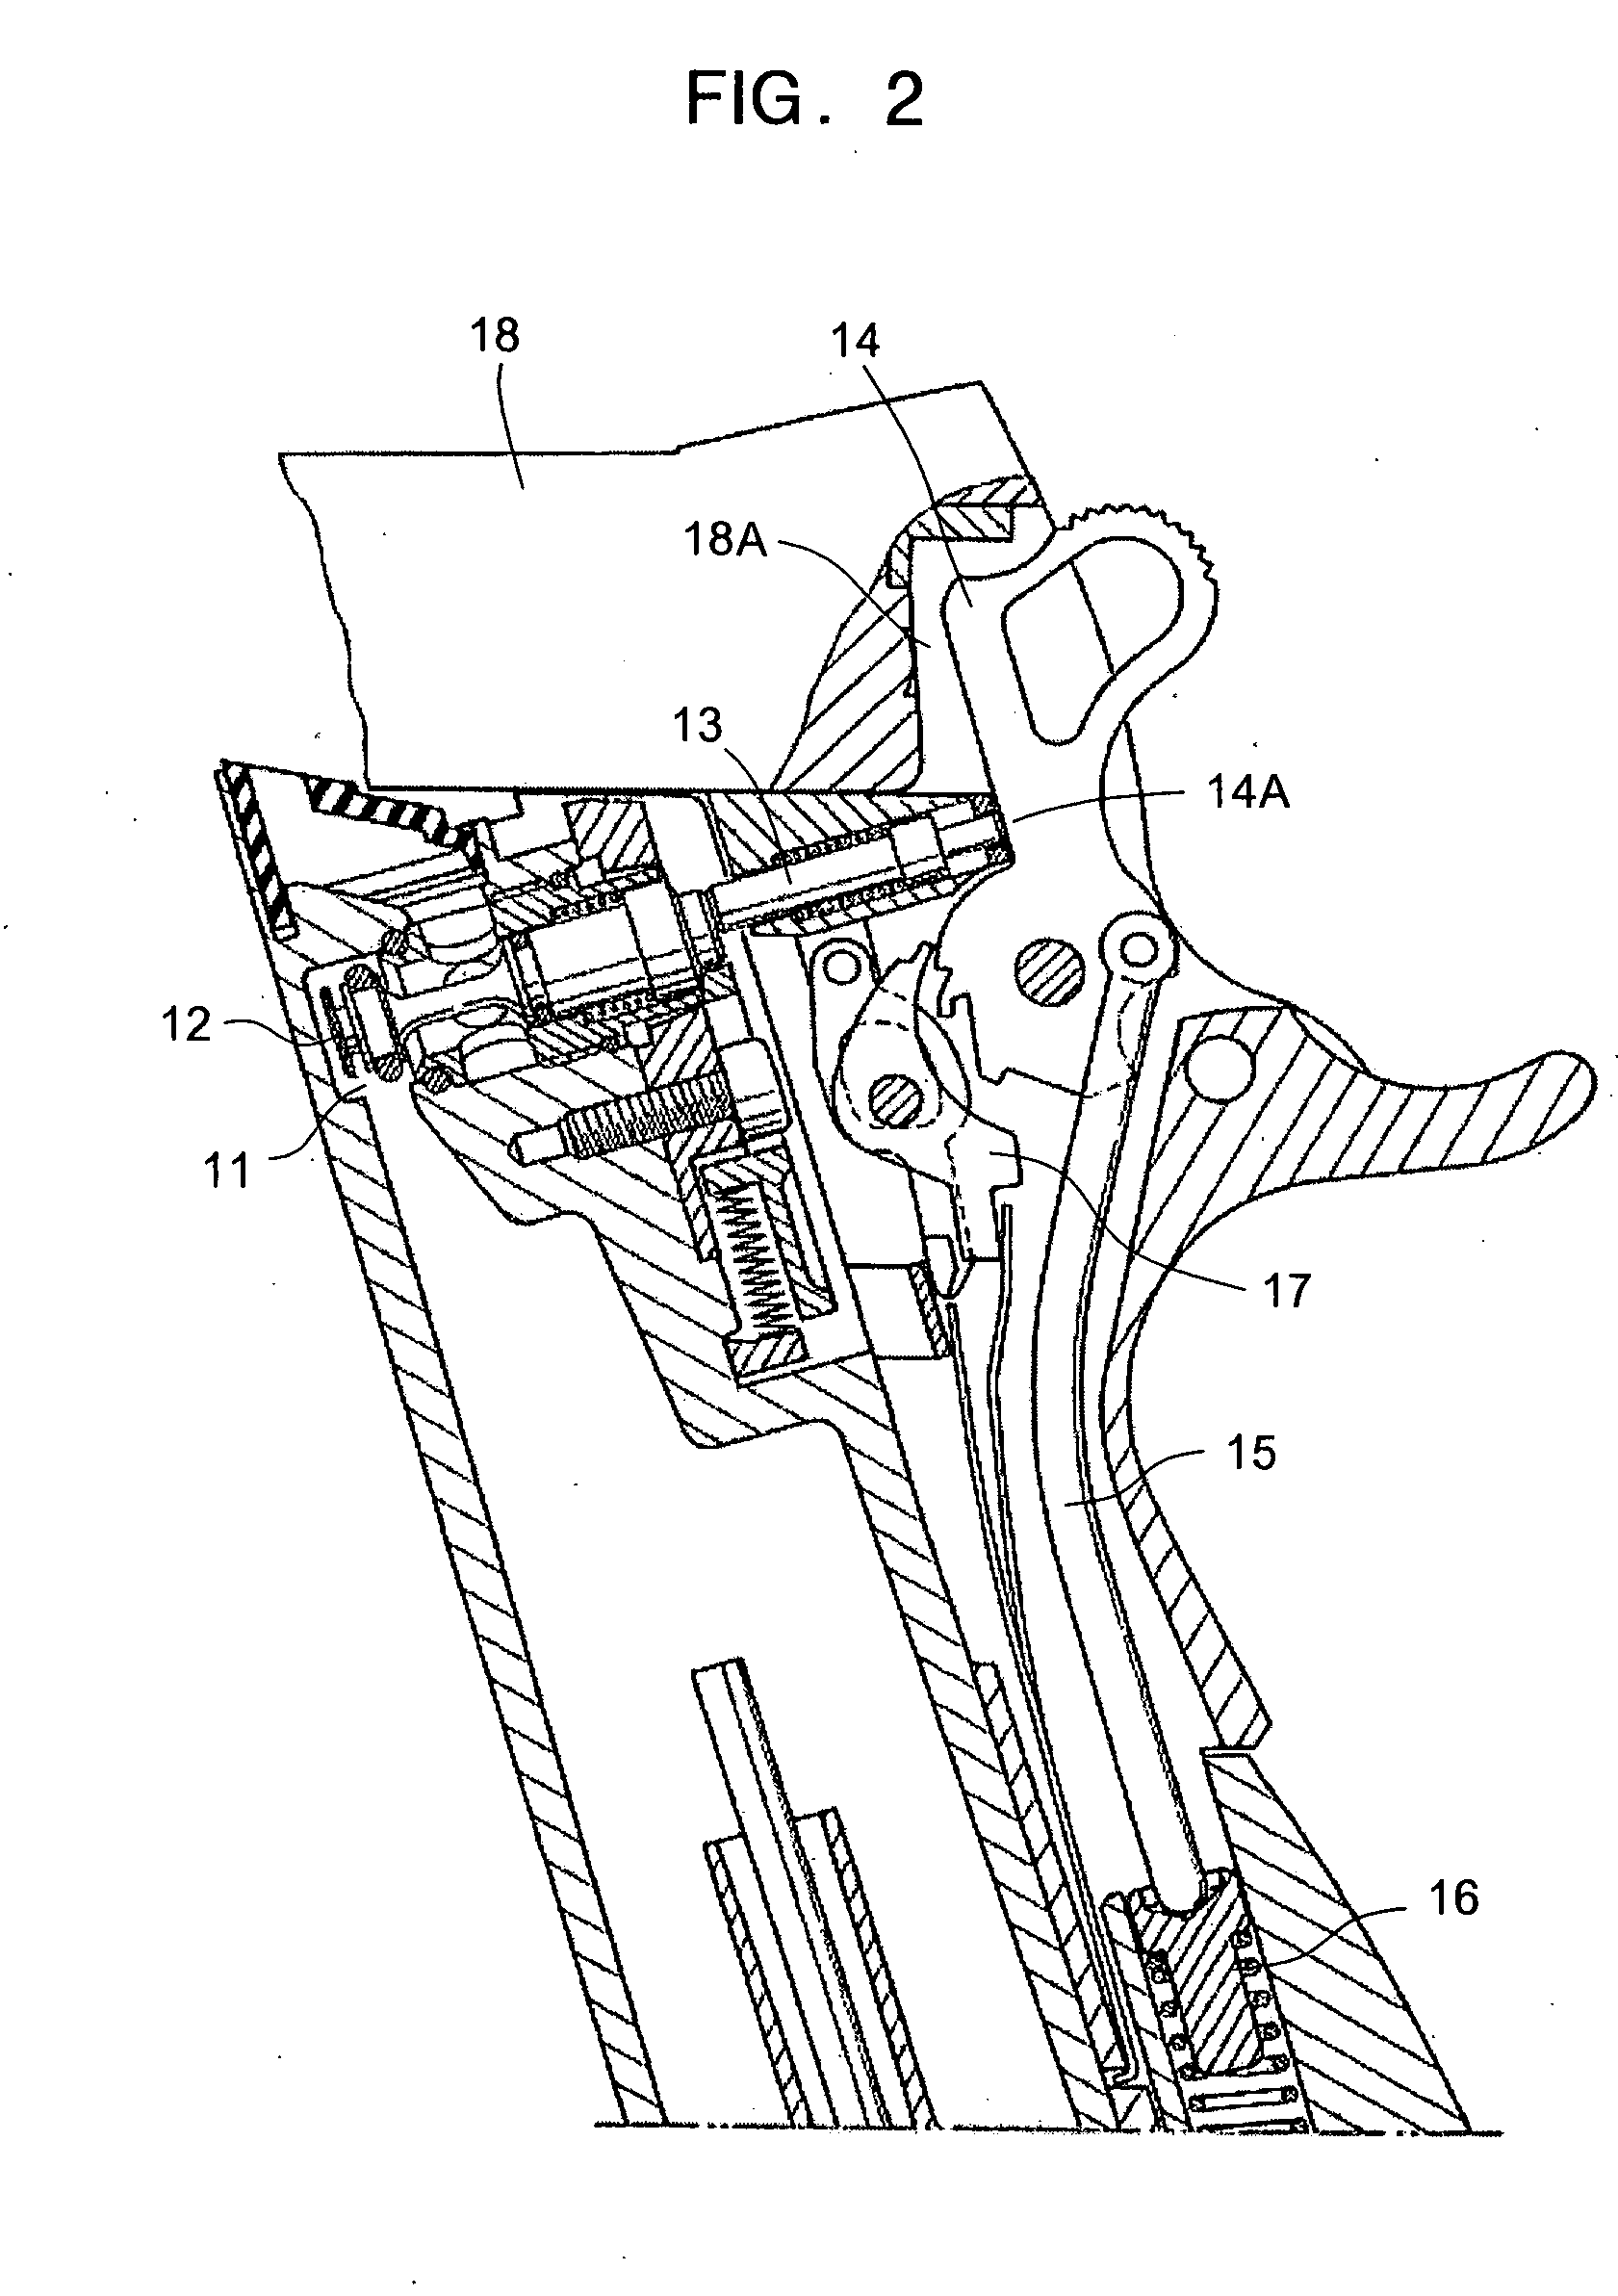 Gas supplying mechanism in a gas powered toy gun